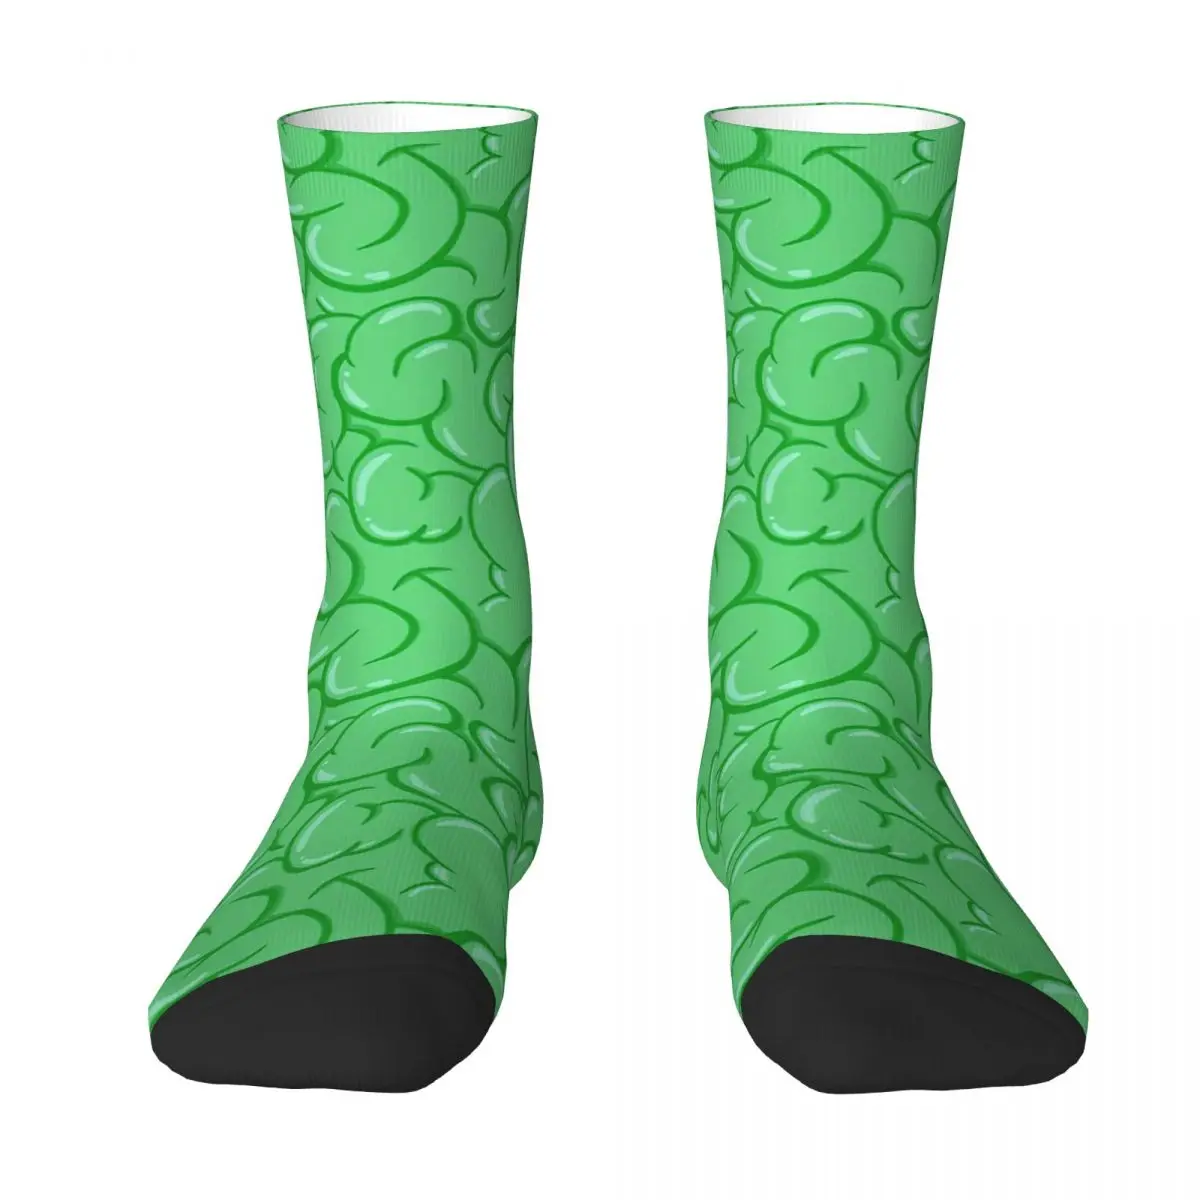 Носки для взрослых с узором зелёного мозга зомби, носки унисекс, мужские носки женские носки